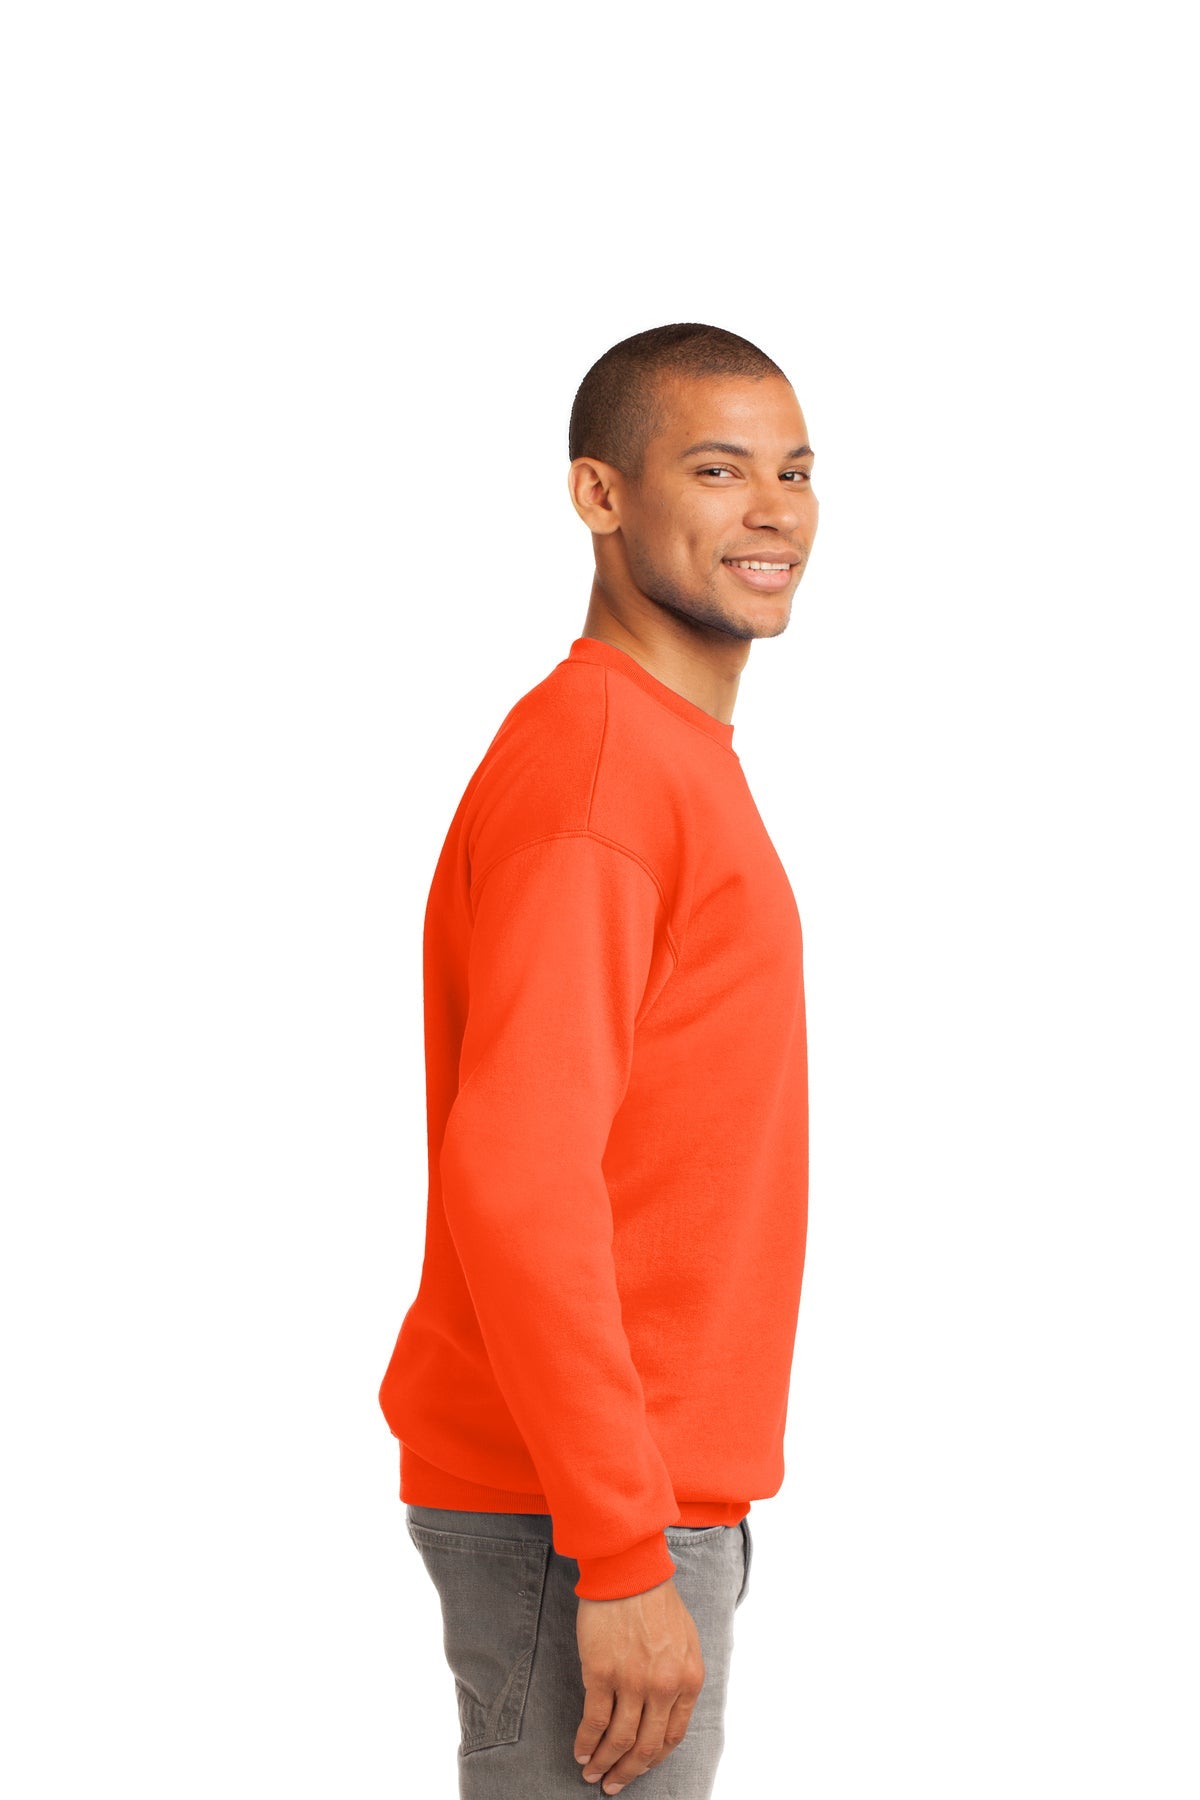 port & company_pc90t _safety orange_company_logo_sweatshirts